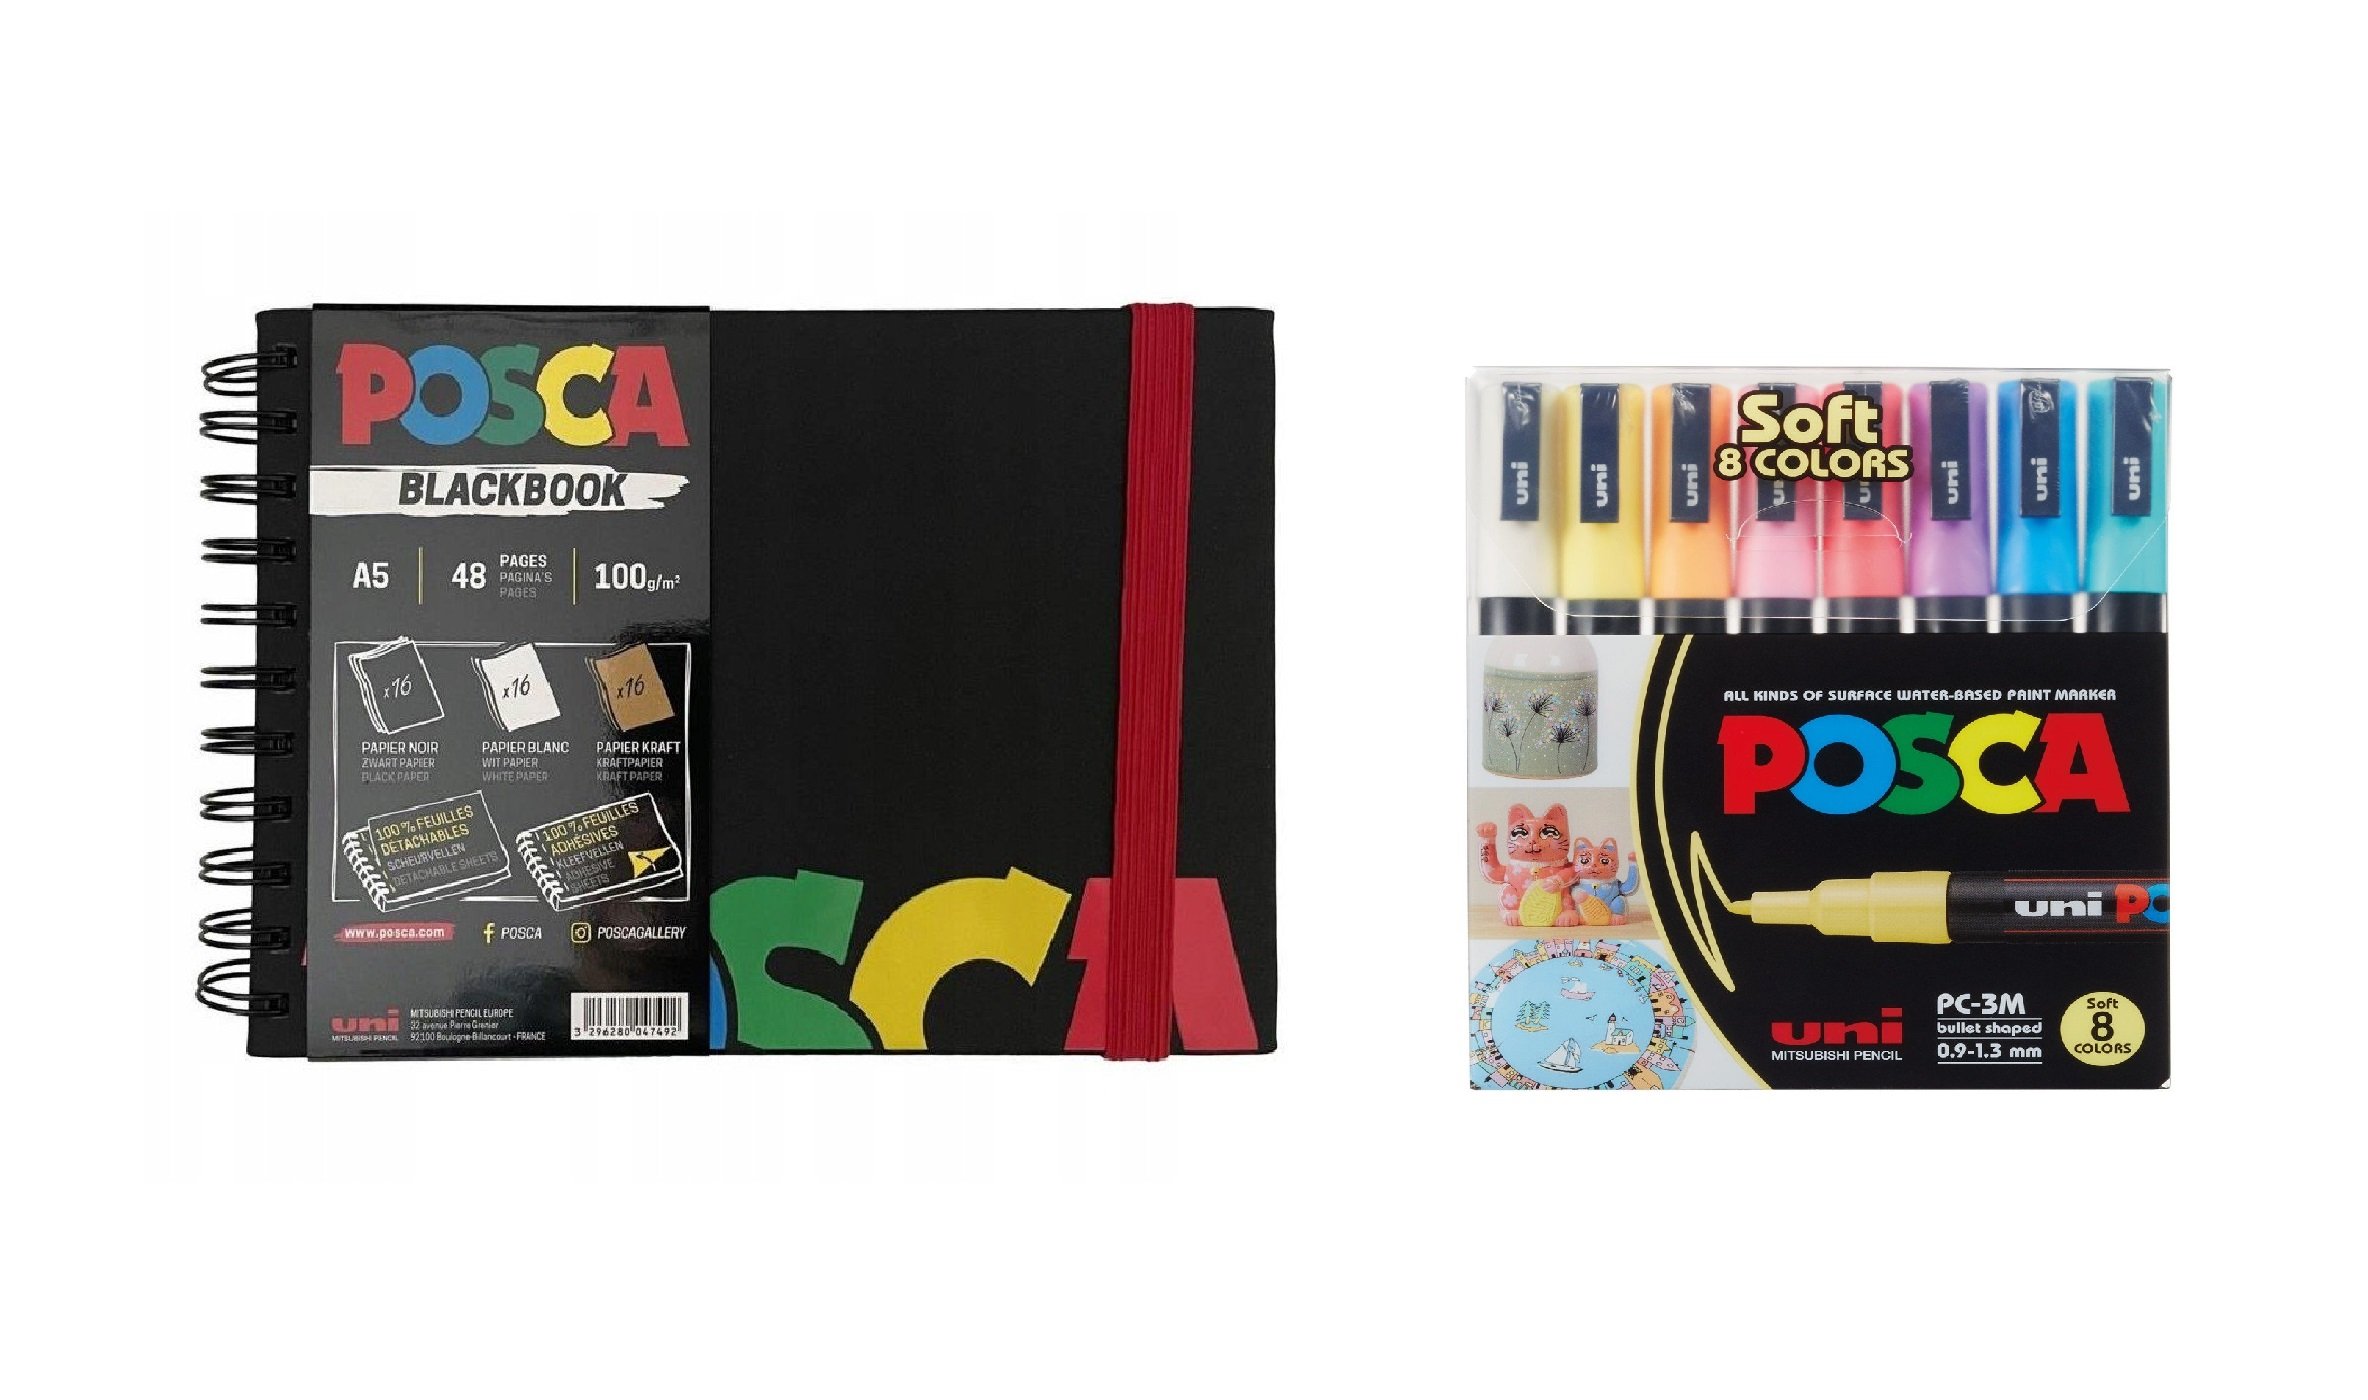 Posca - A5 BlackBook&PC3M - Fine Tip Pen - Soft Colors 8 pc - Leker